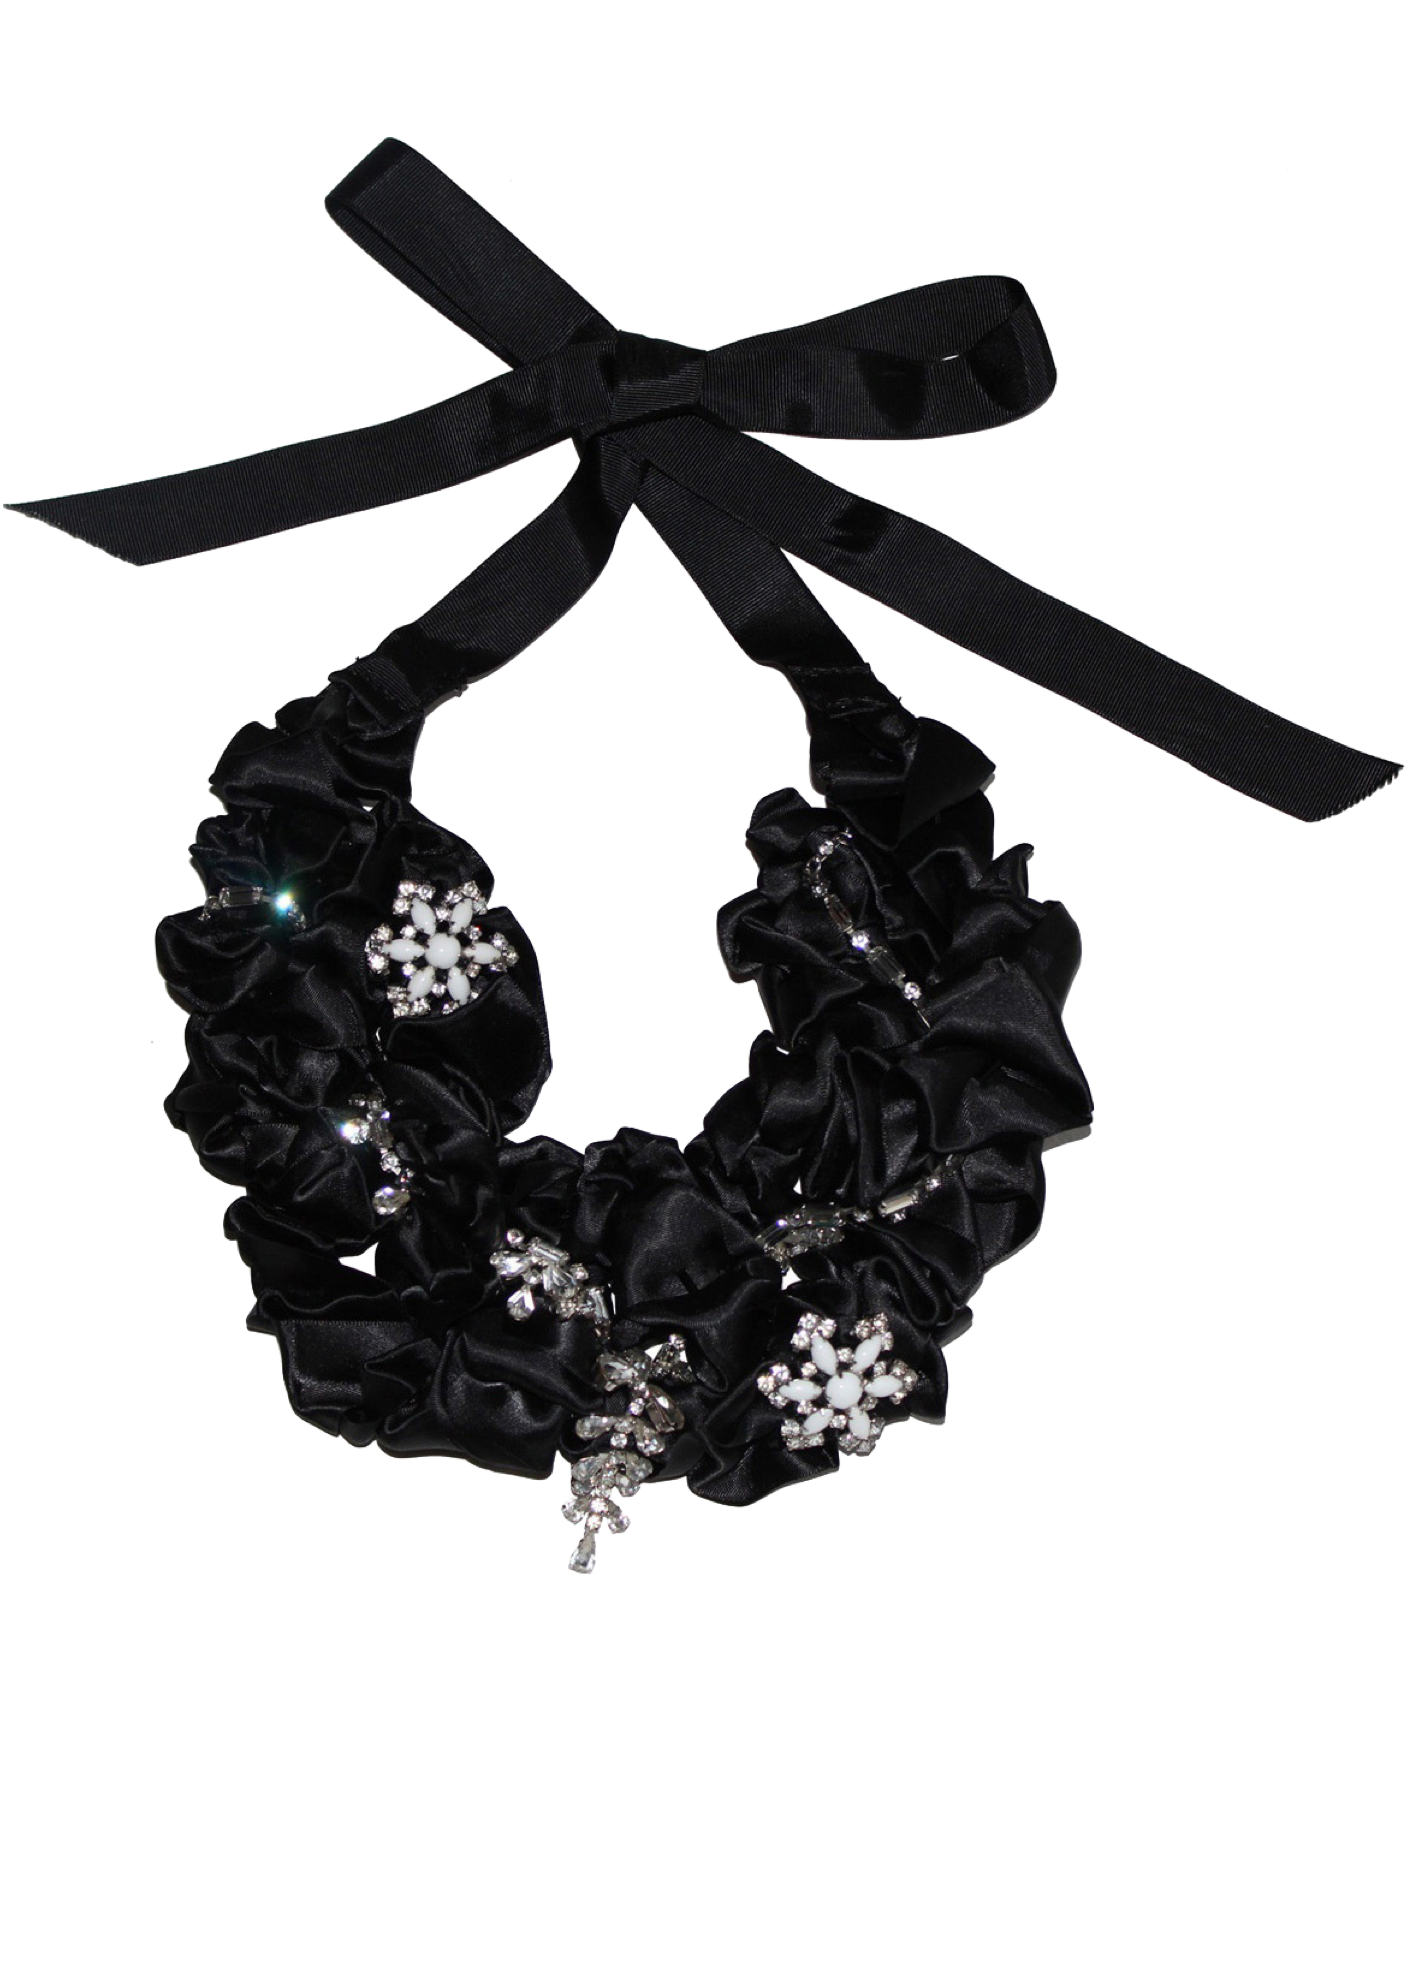 Black Star Necklace